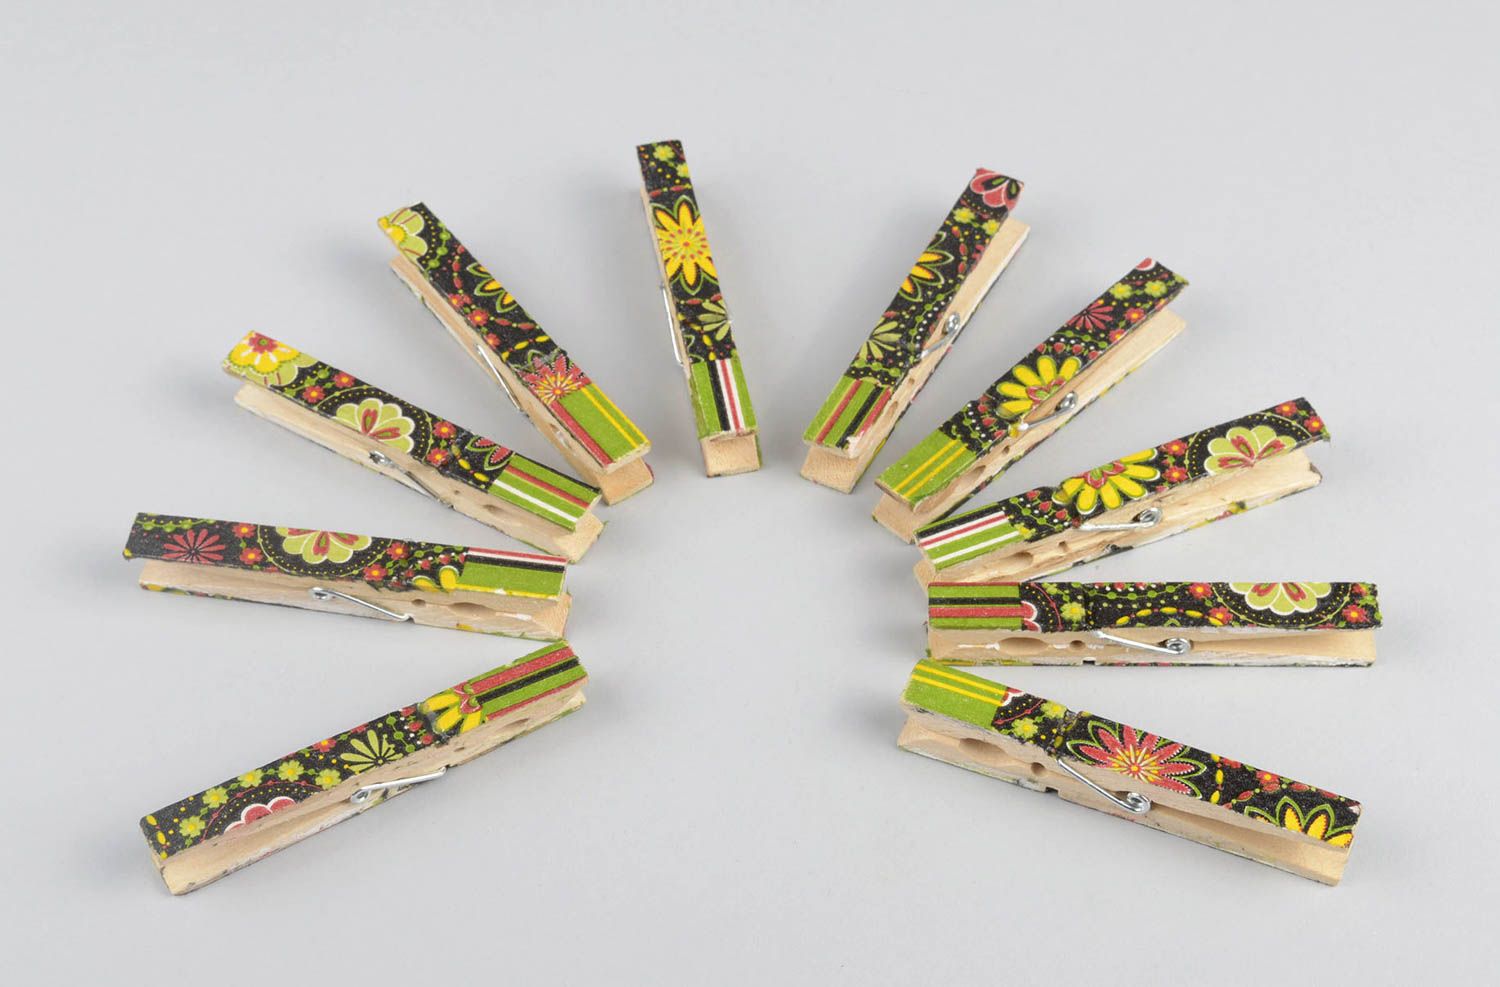 Handmade clothespins wooden clothespins set of 10 clothespins best souvenirs photo 2